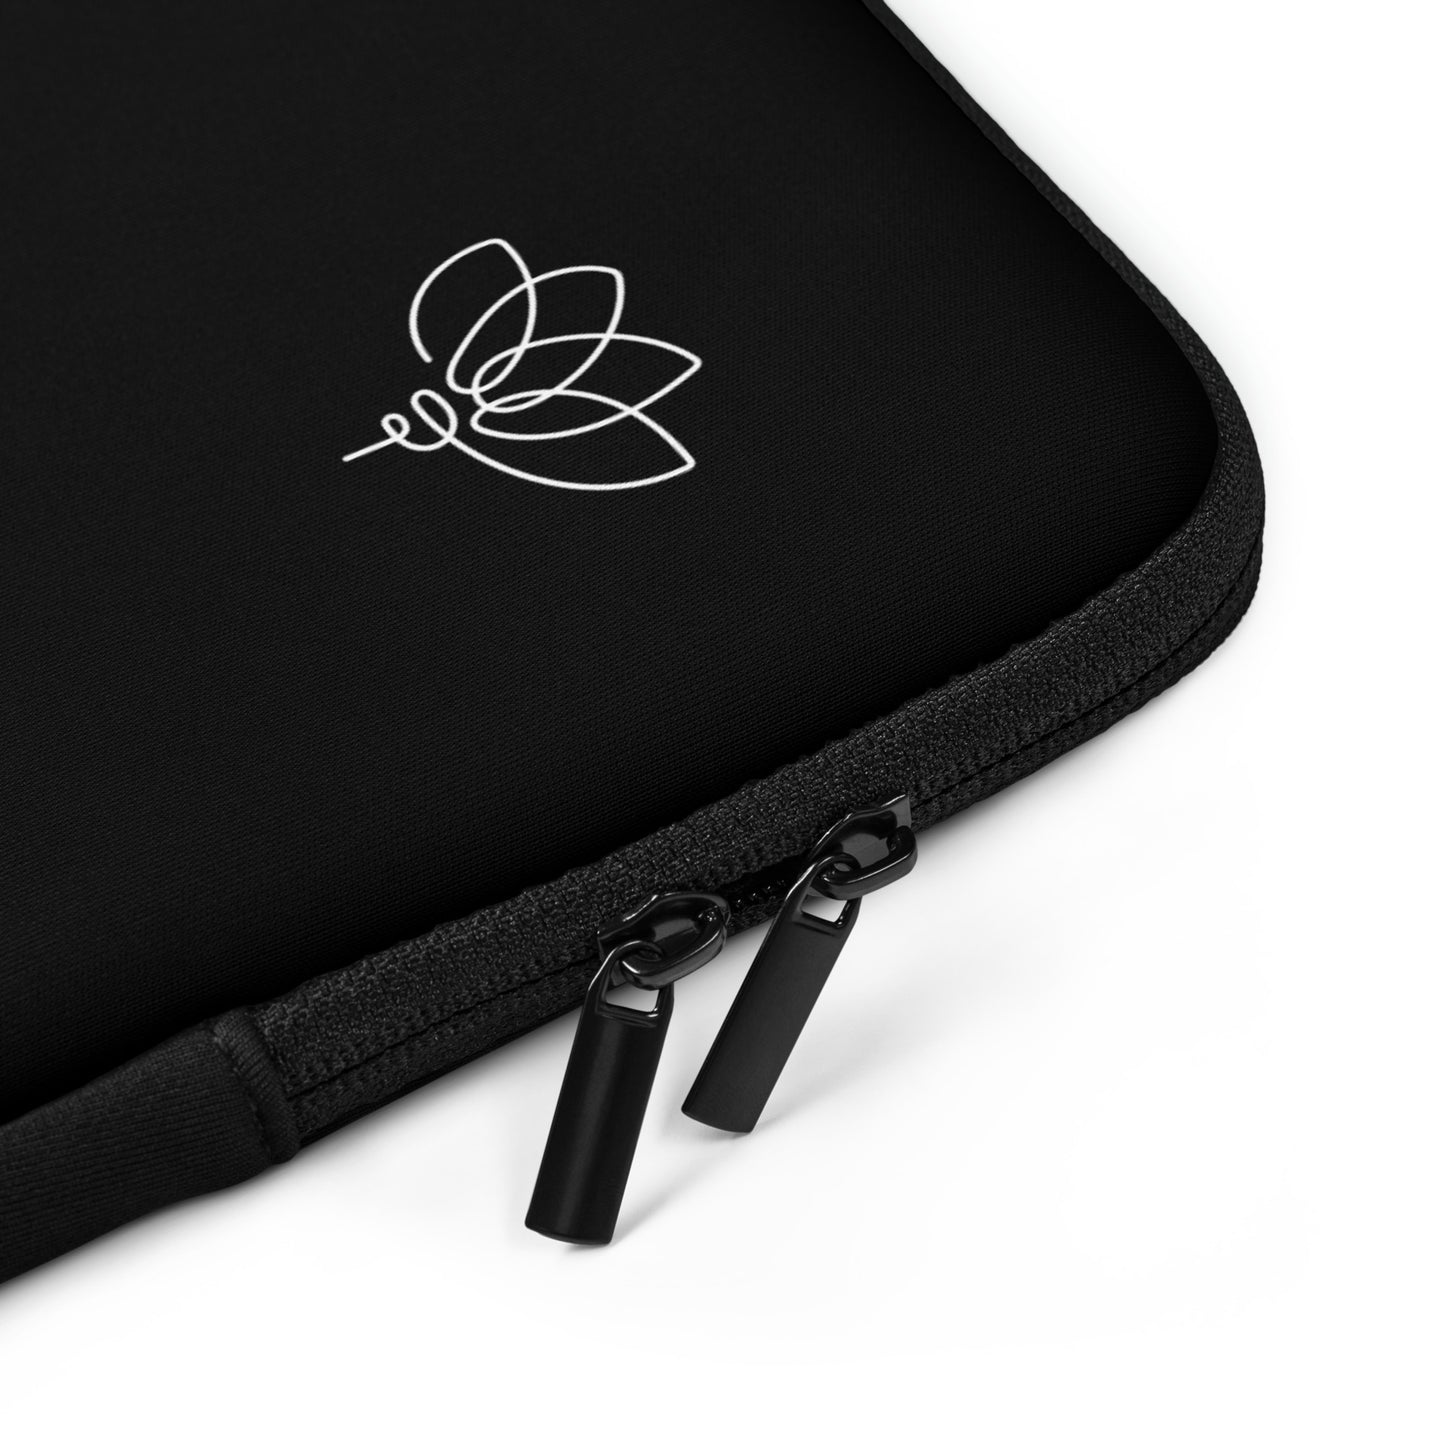 'The LOTUS' Dark Logo - Black Laptop Sleeve